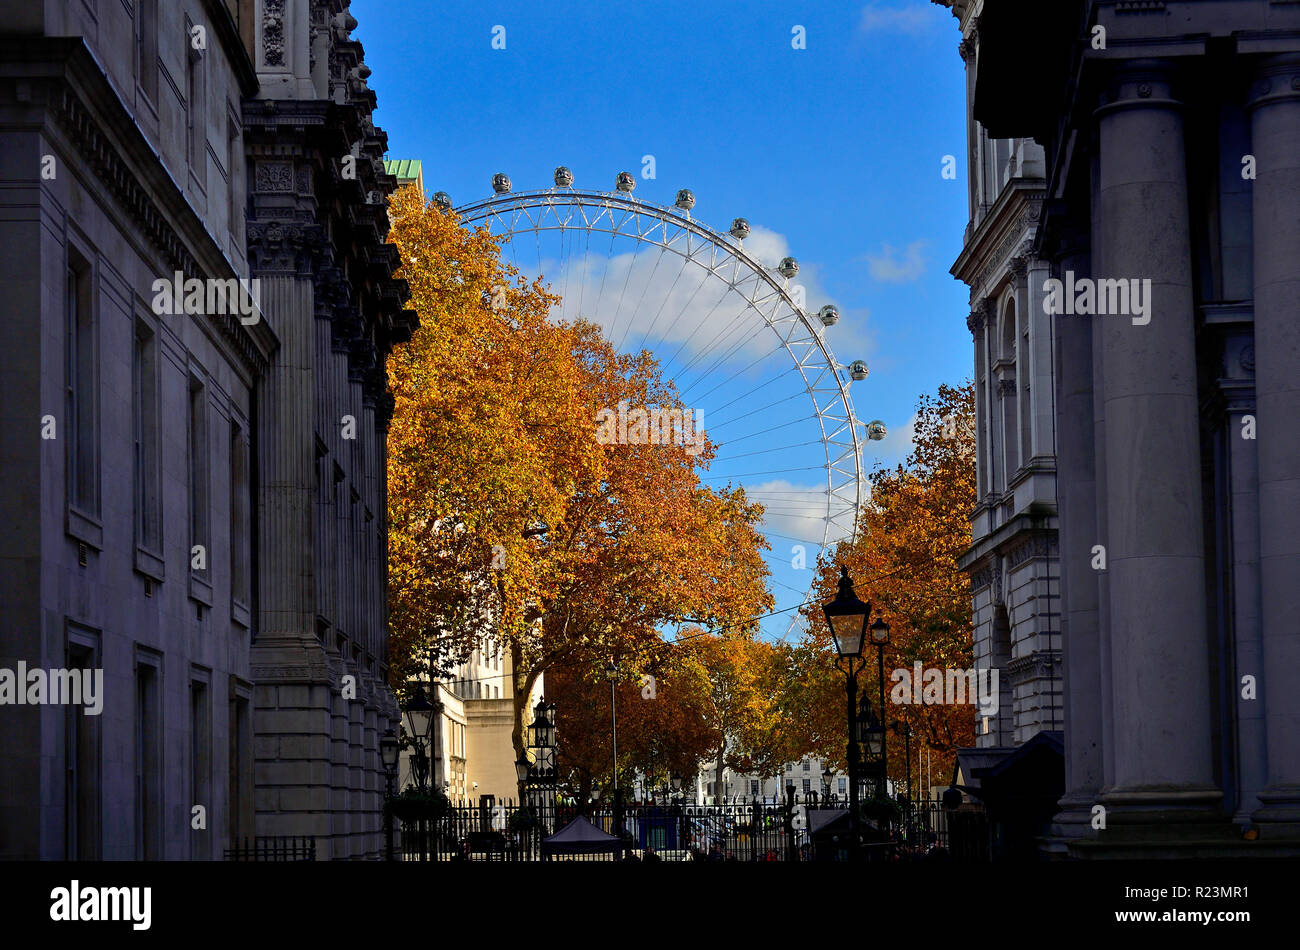 London Eye / Millennium Wheel seen from inside Downing Street, London, England, UK. Stock Photo